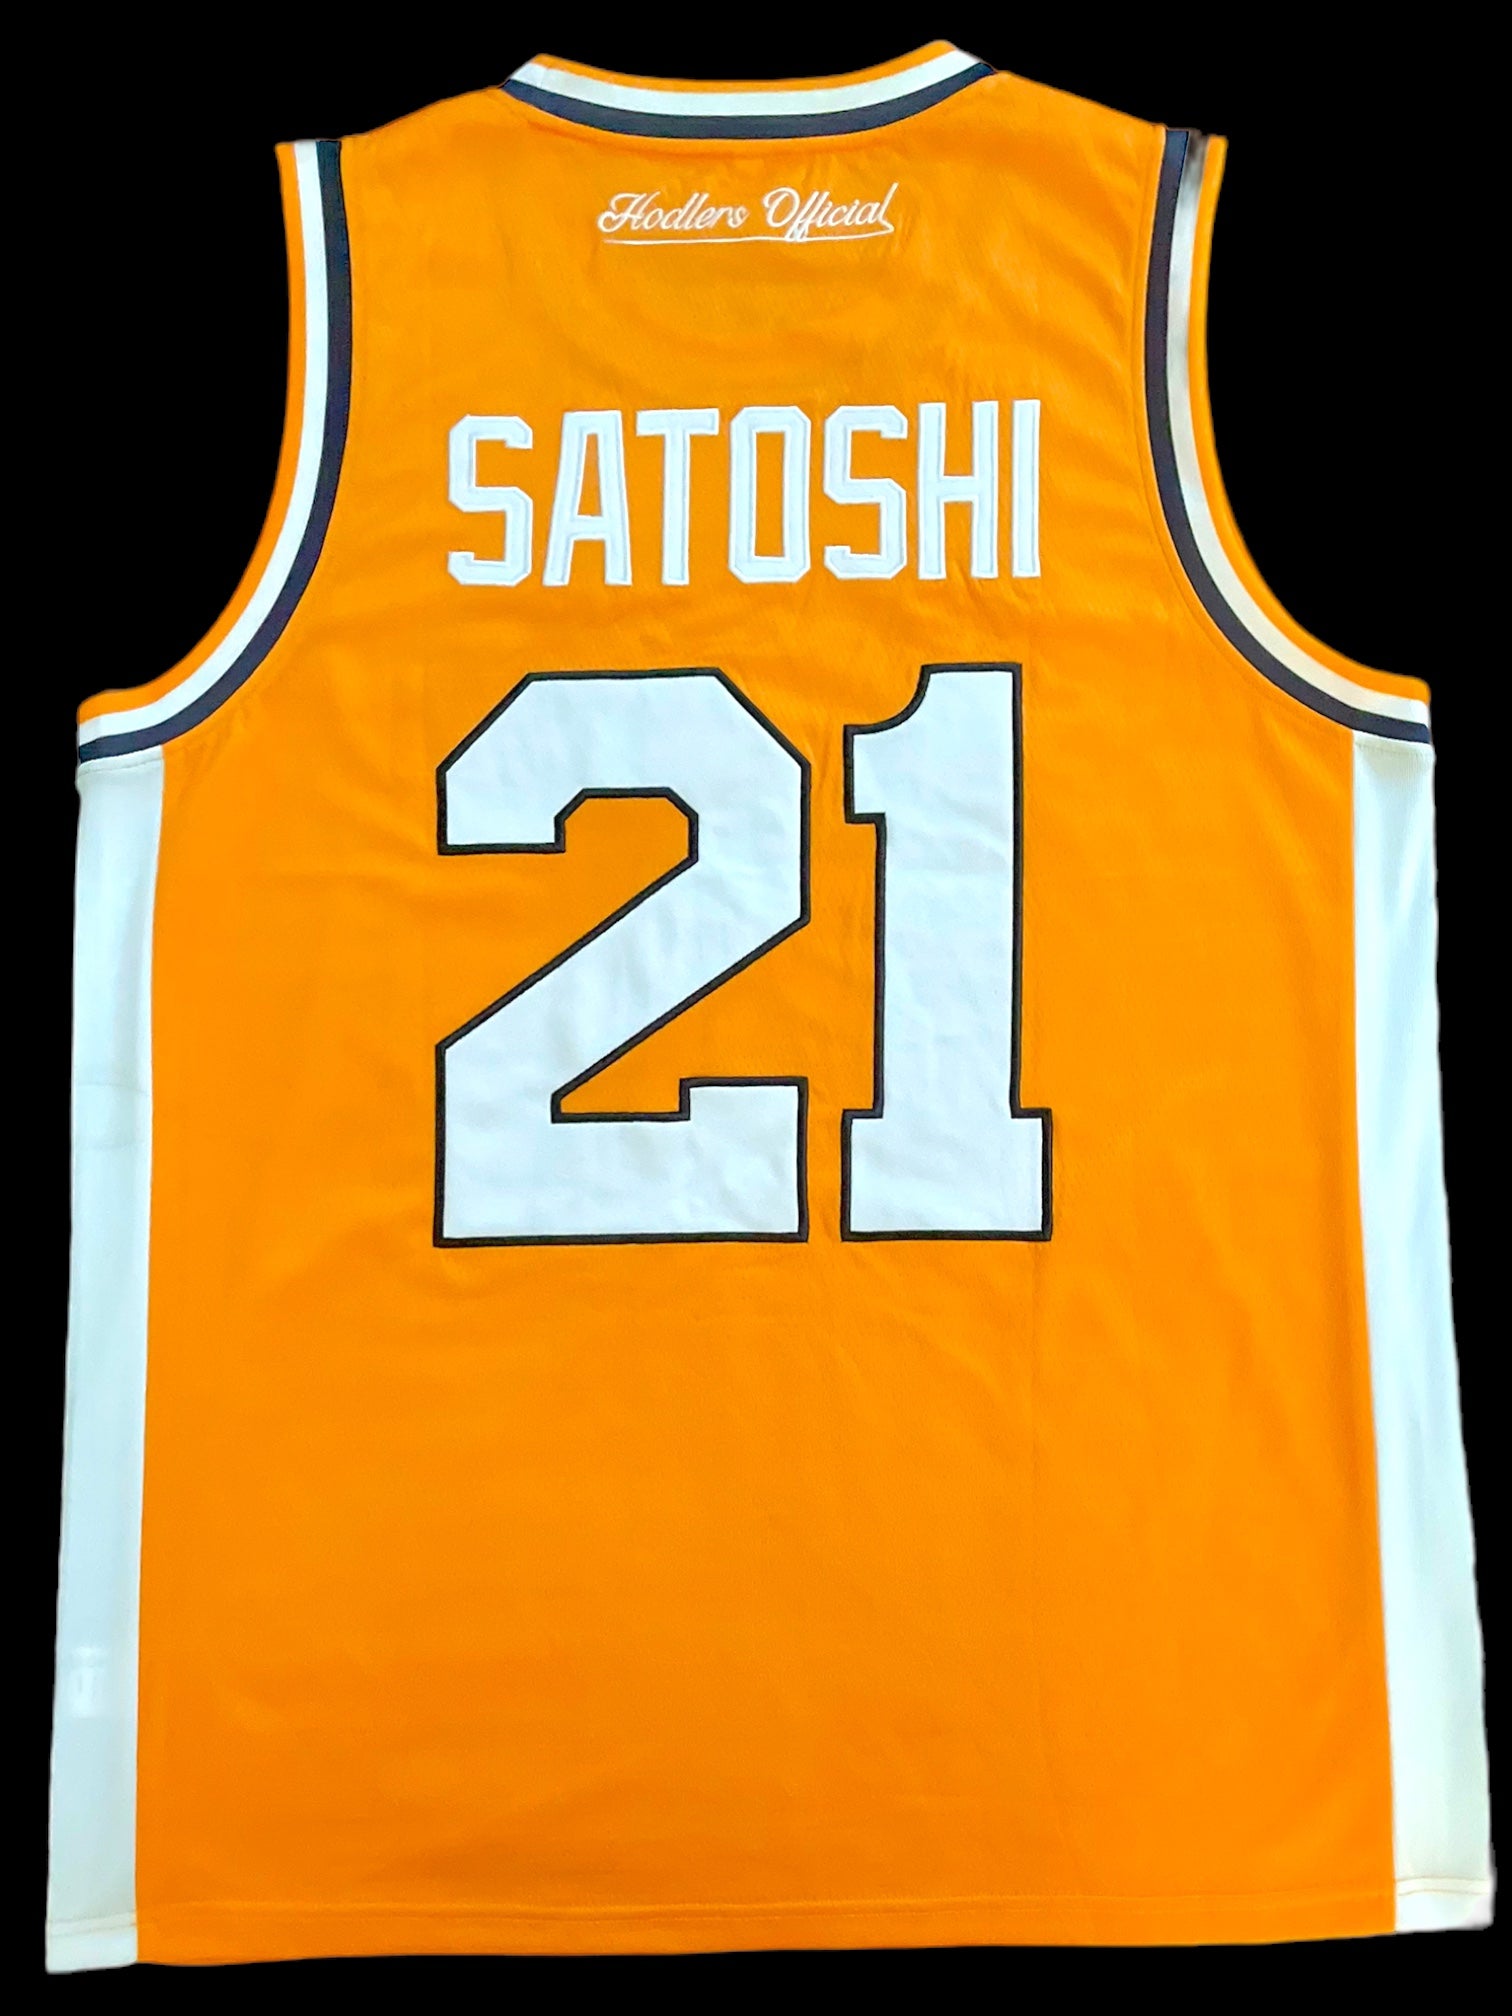 Team Bitcoin Basketball Jersey Satoshi Nakamoto 21 Hodlers Official 